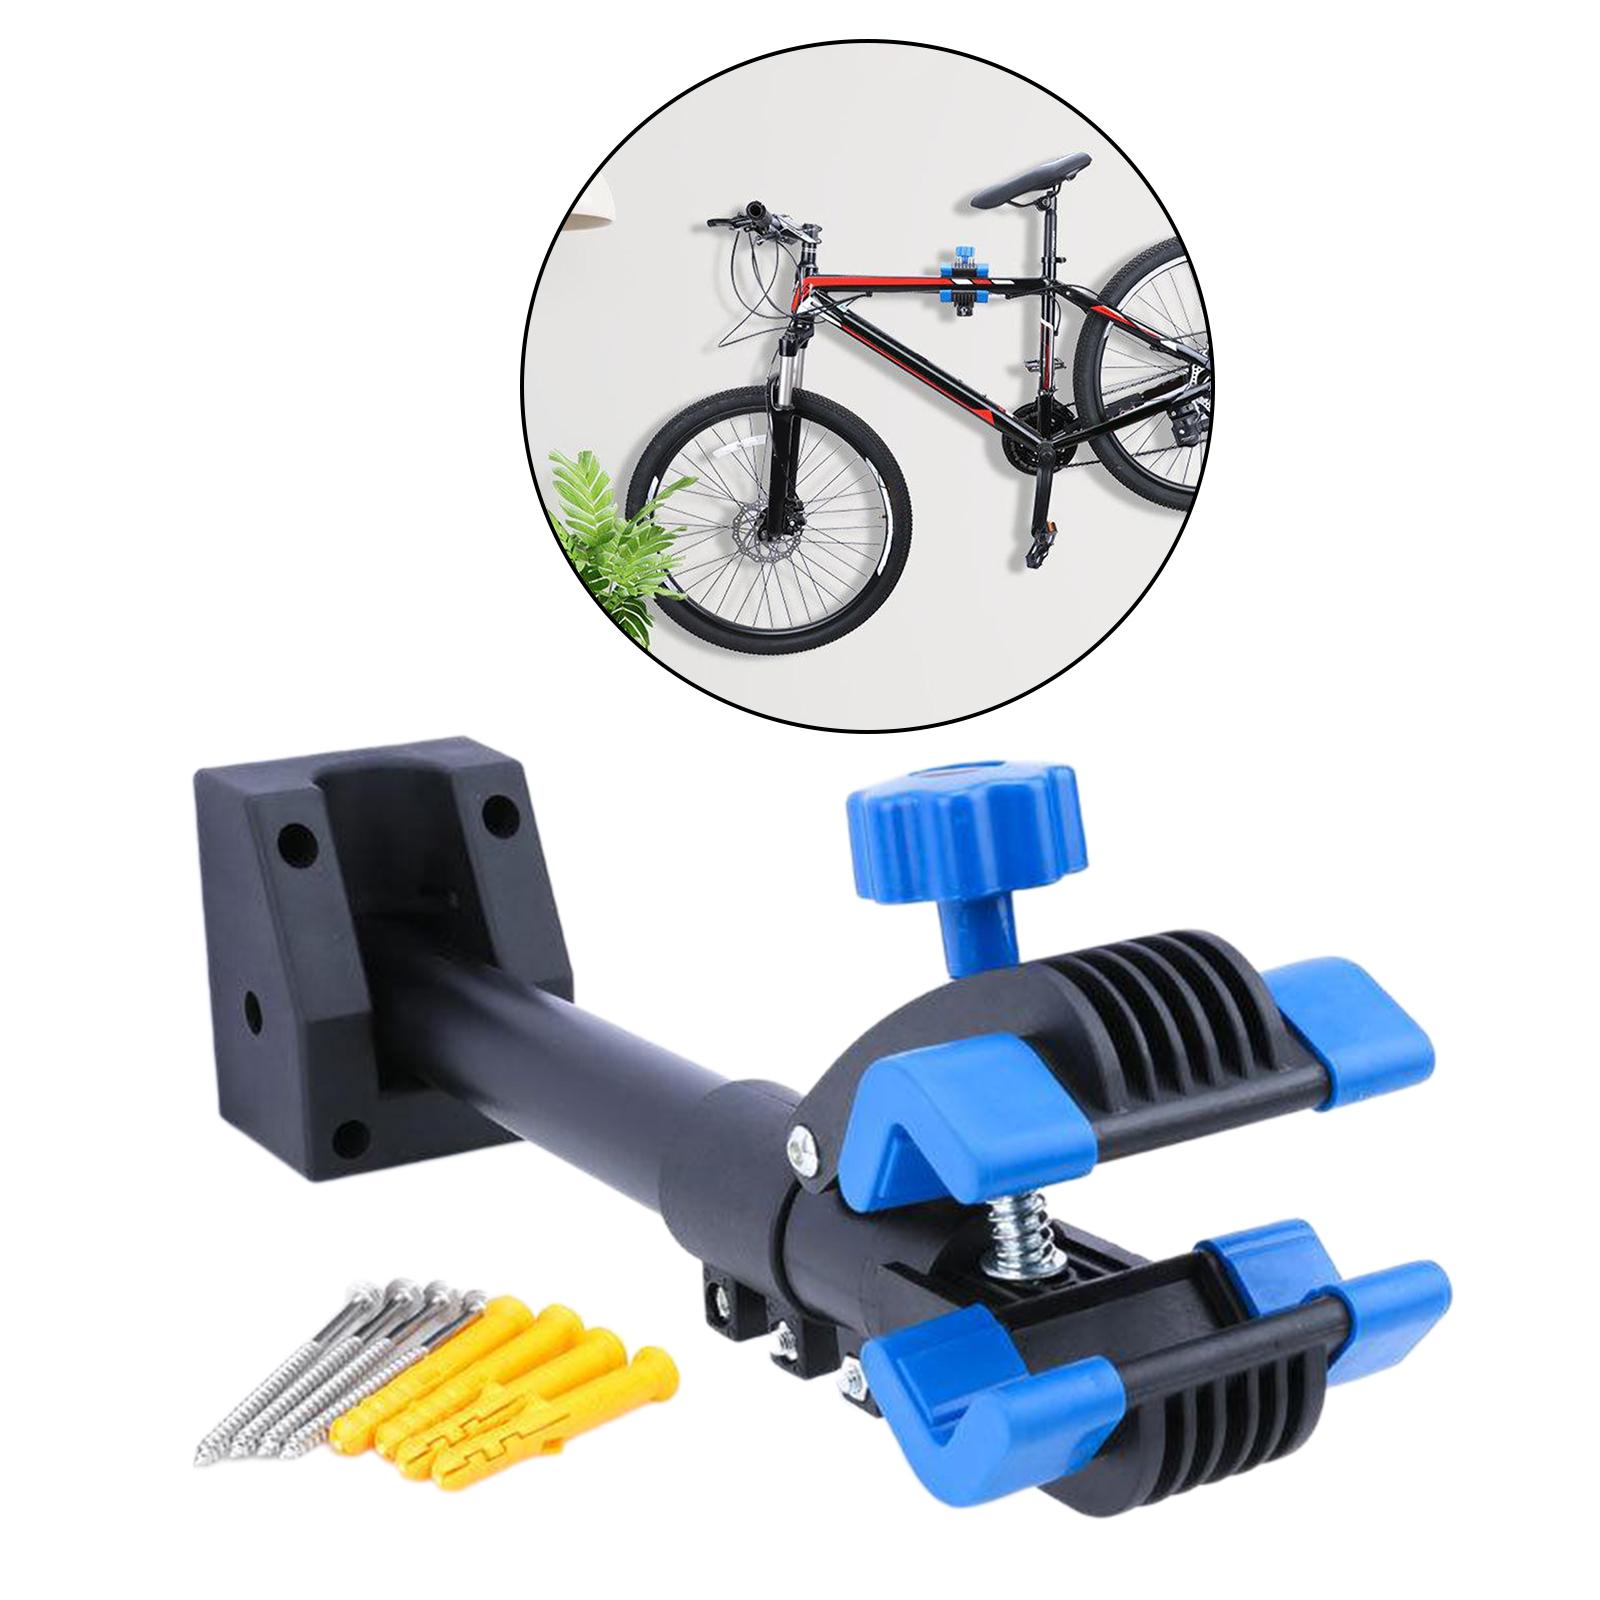 Folding Bike Repair Stand Clamp, Bicycle Wall Mount Rack Holder, Bicycle Mechanic Workstand Hanger, Maintenance Tool